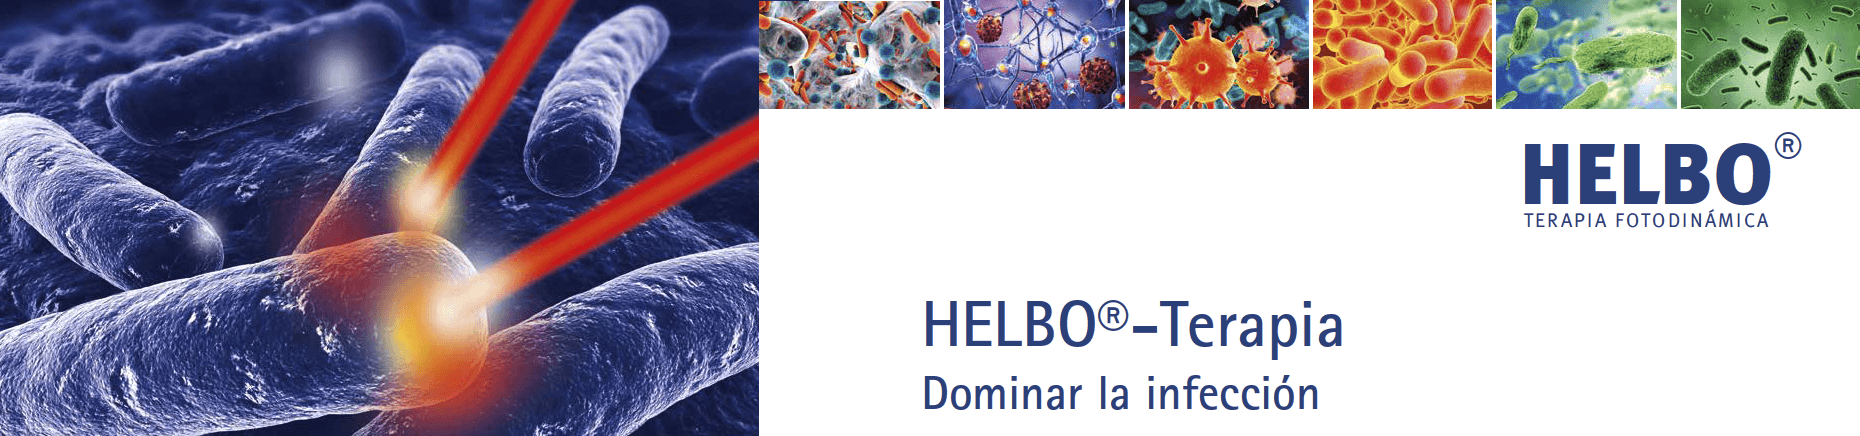 helbo-terapia-fotodinamica-pozuelo-alarcon